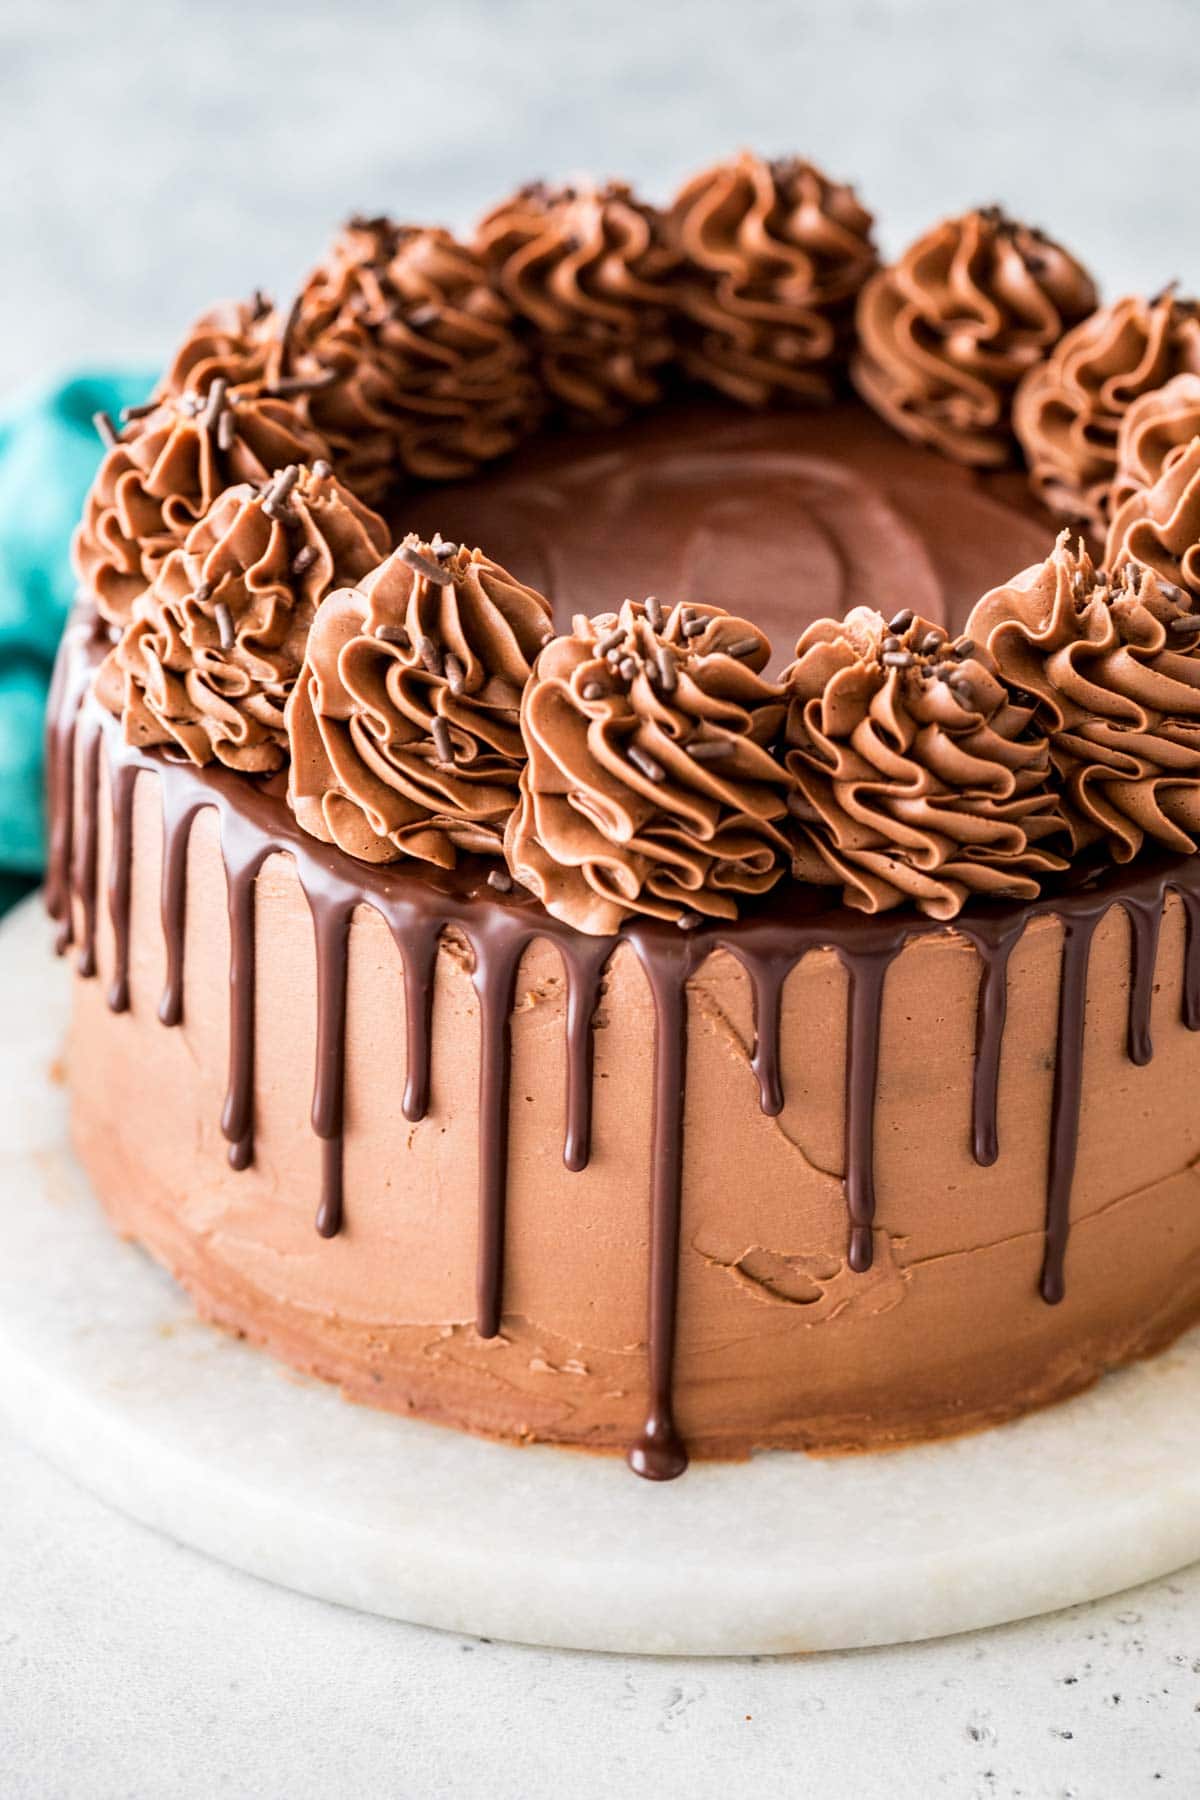 Chocolate cake topped with ganache drips and chocolate icing swirls.